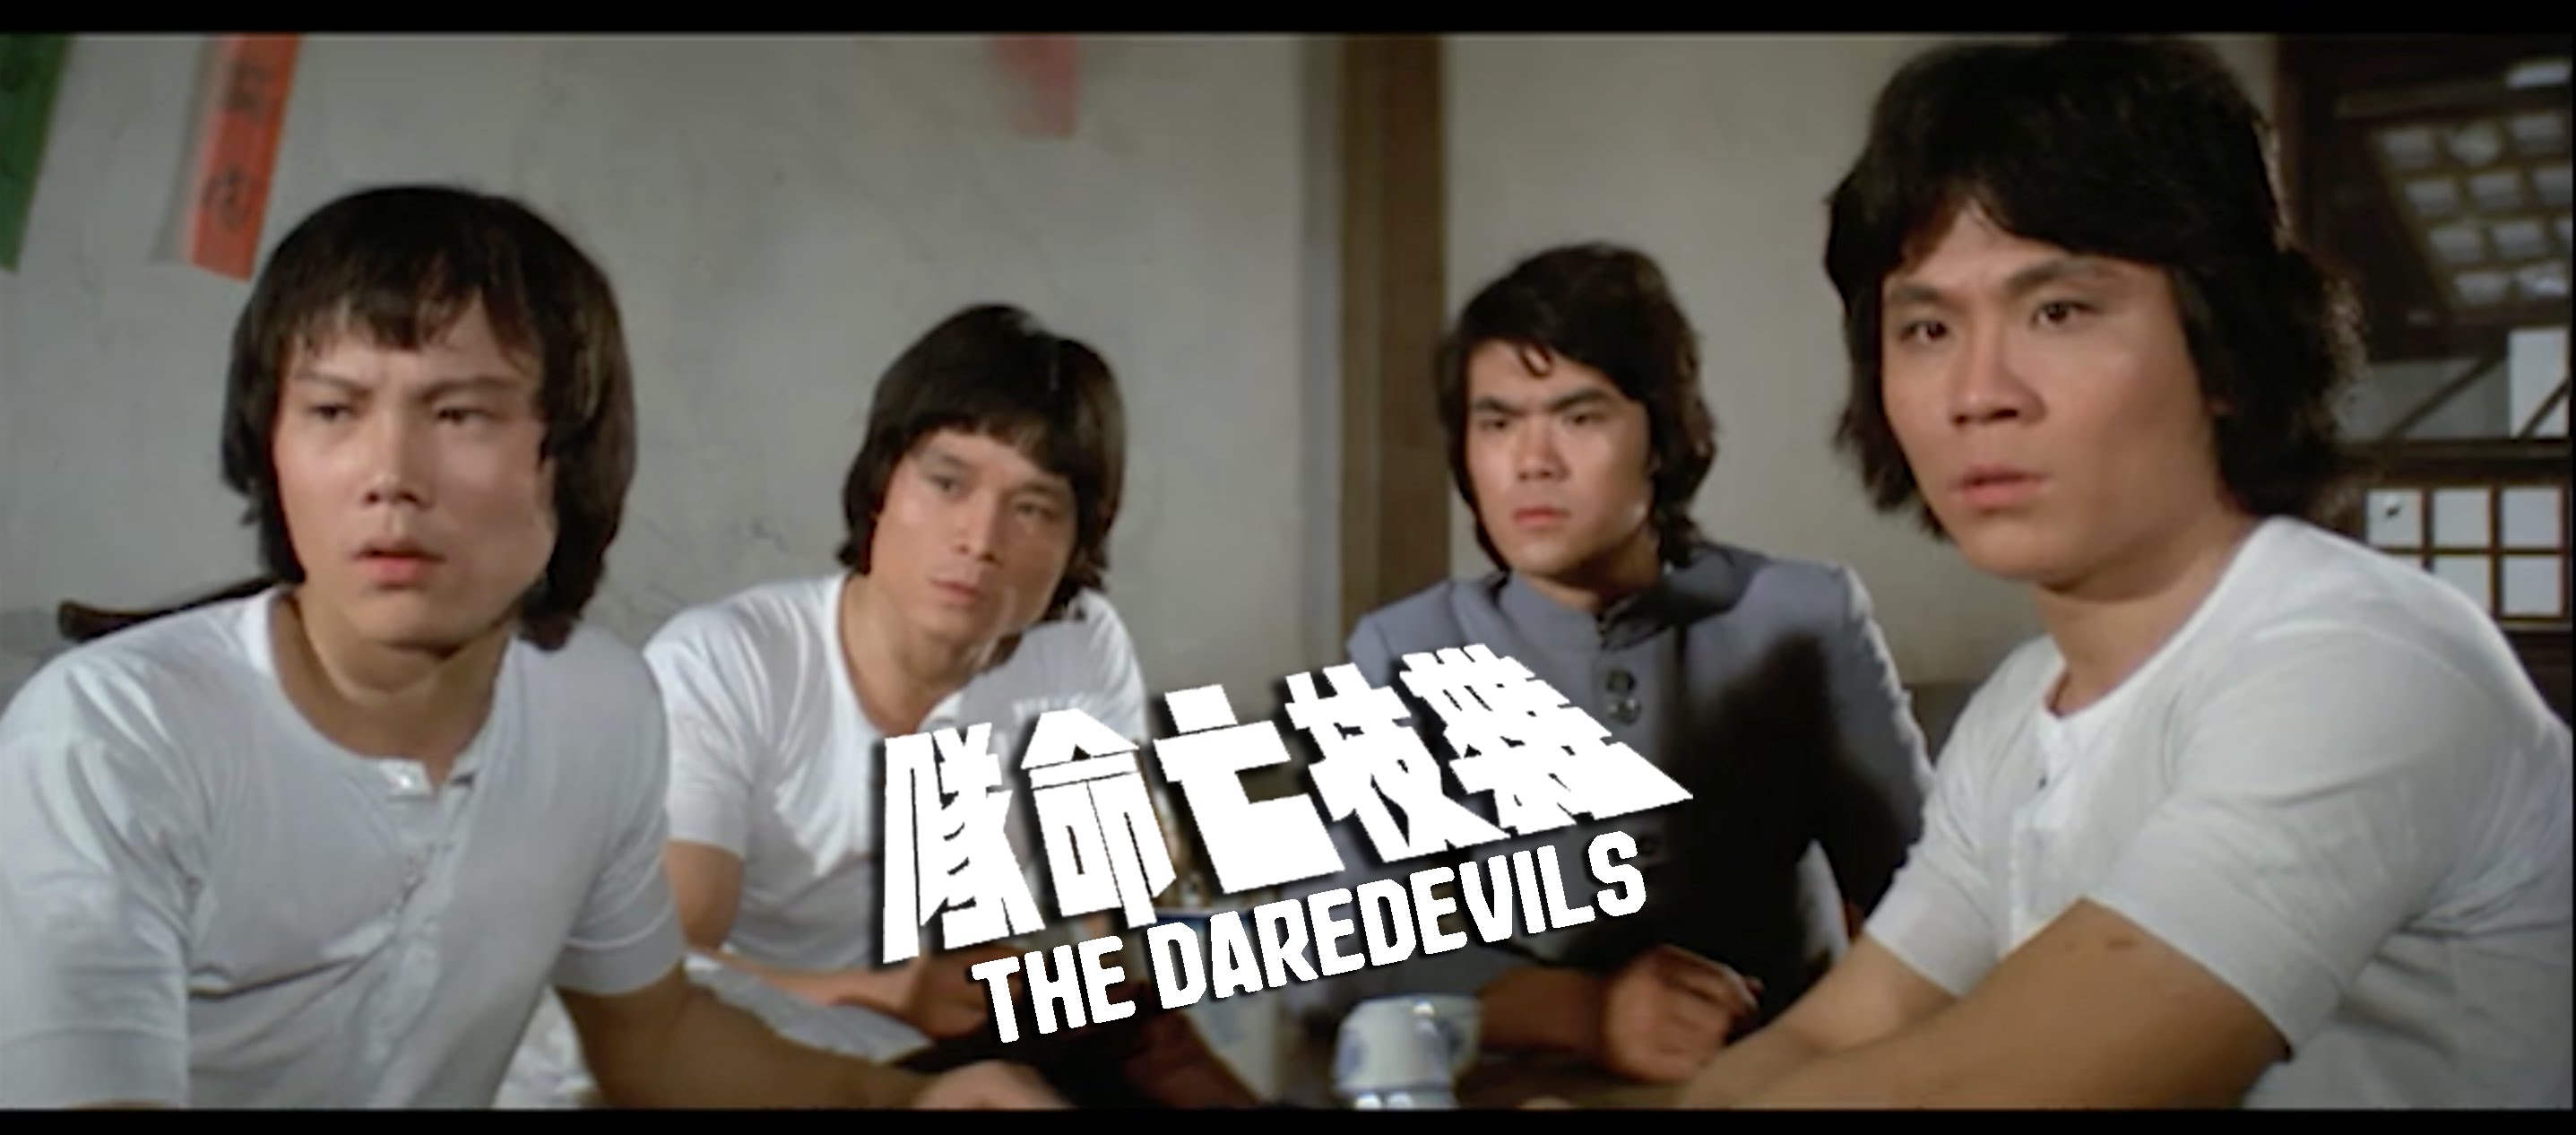 Shaolin Daredevils (1979) Screenshot 1 